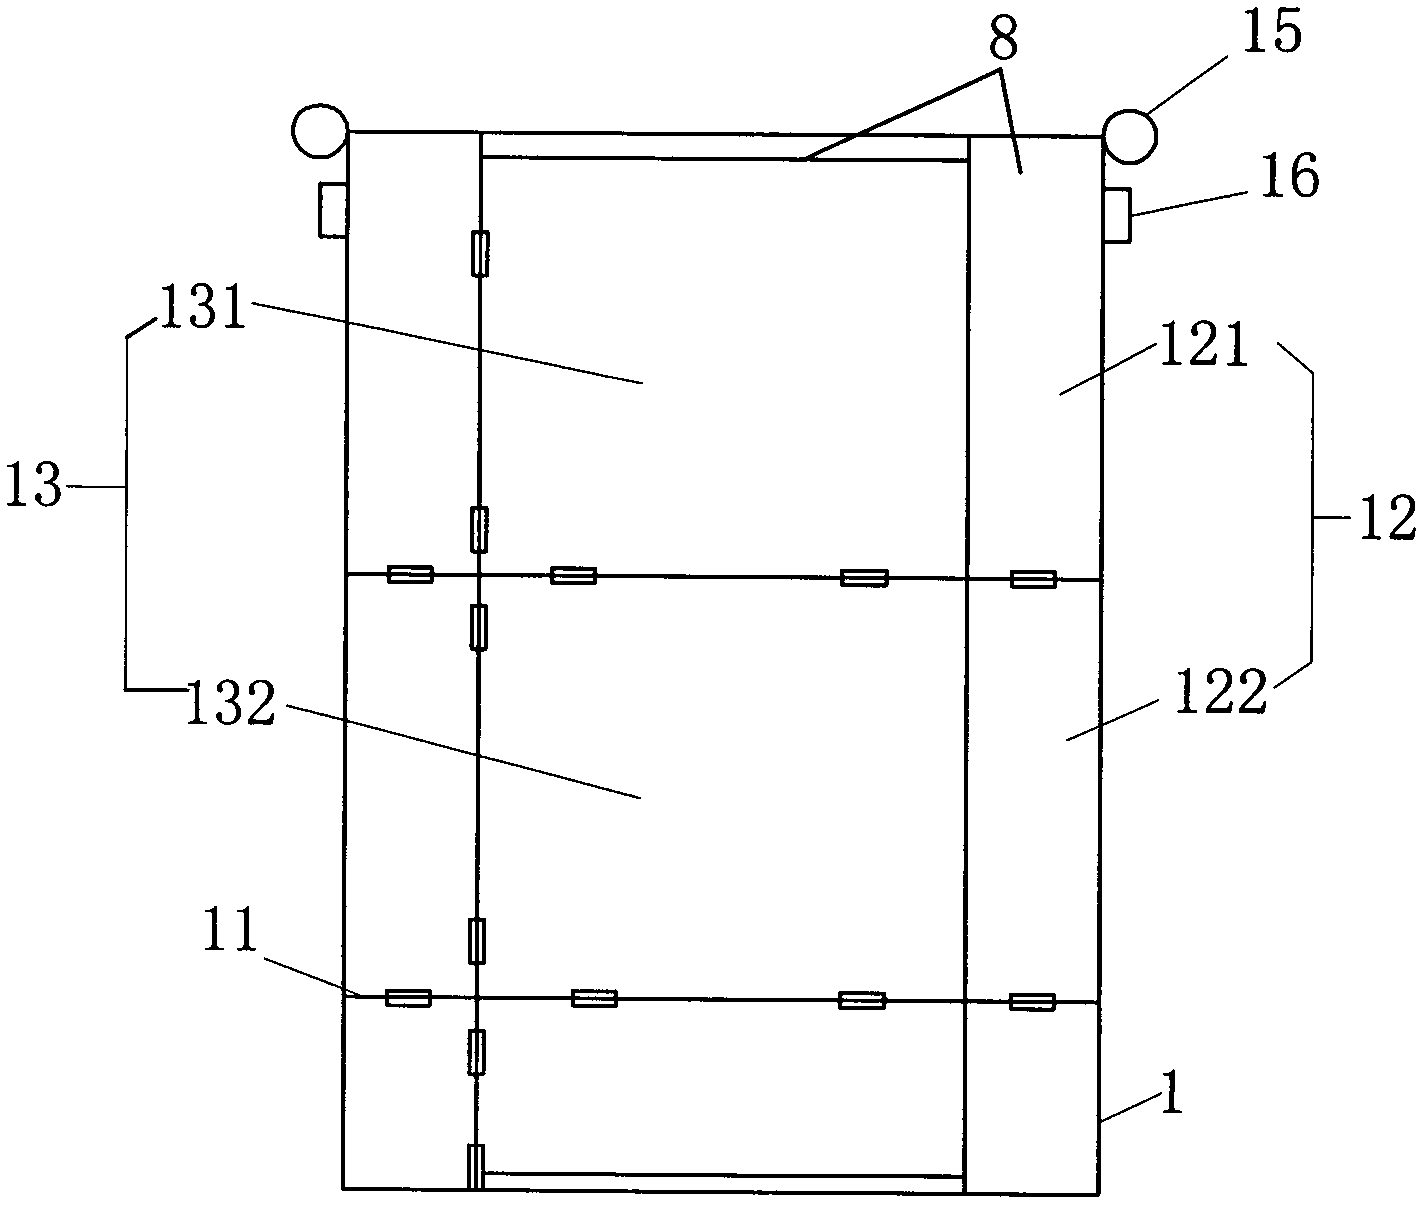 Folding-type movable toilet